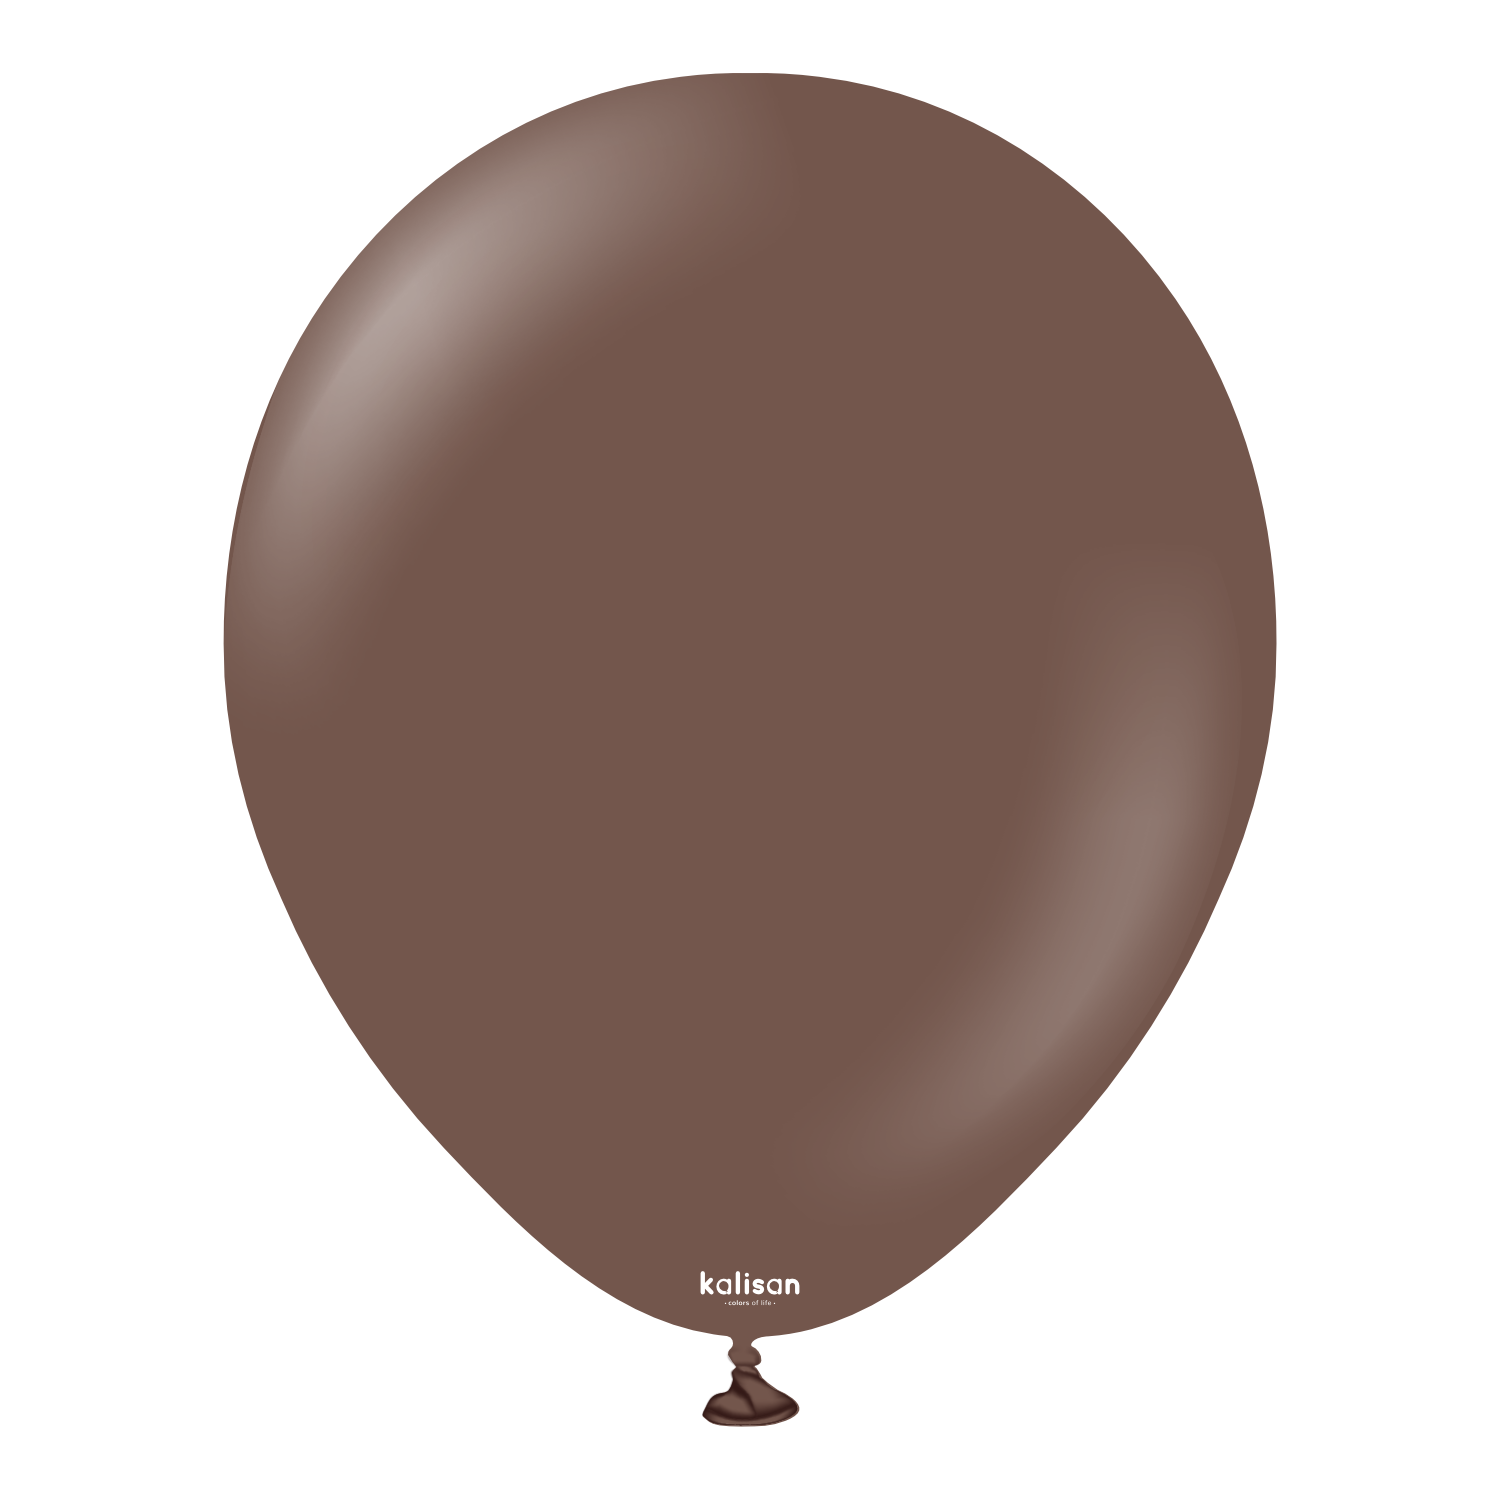 Kalisan Chocolate Brown